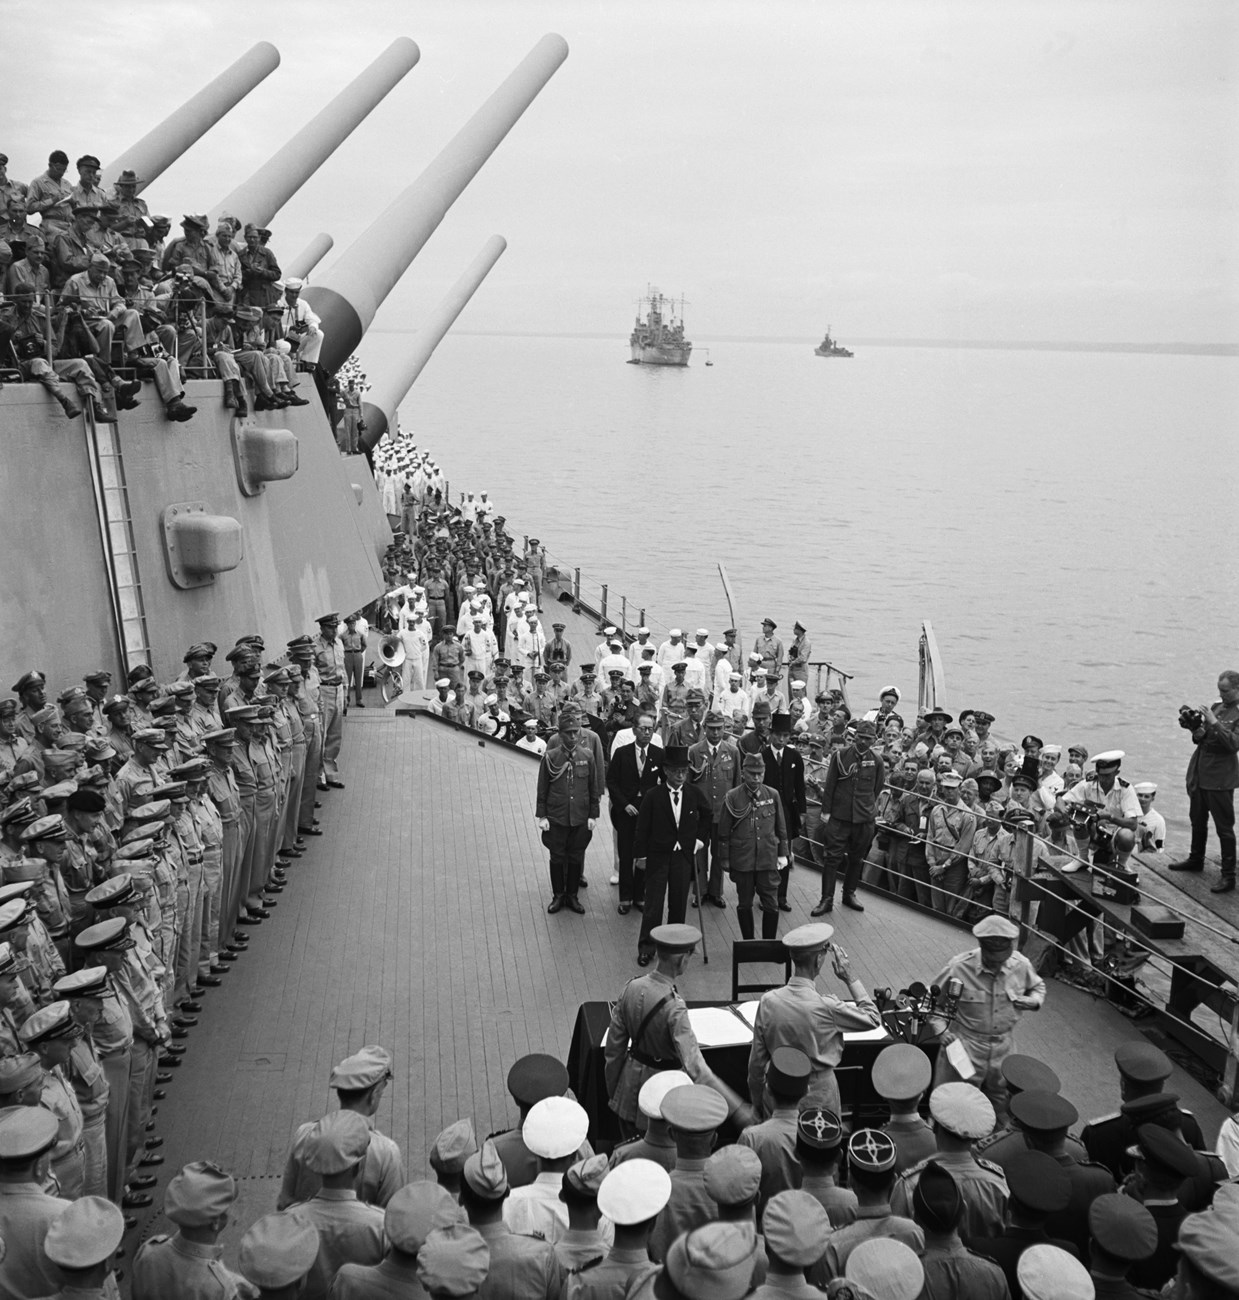 historic image of the Japanese surrender on the USS Missouri, 1945